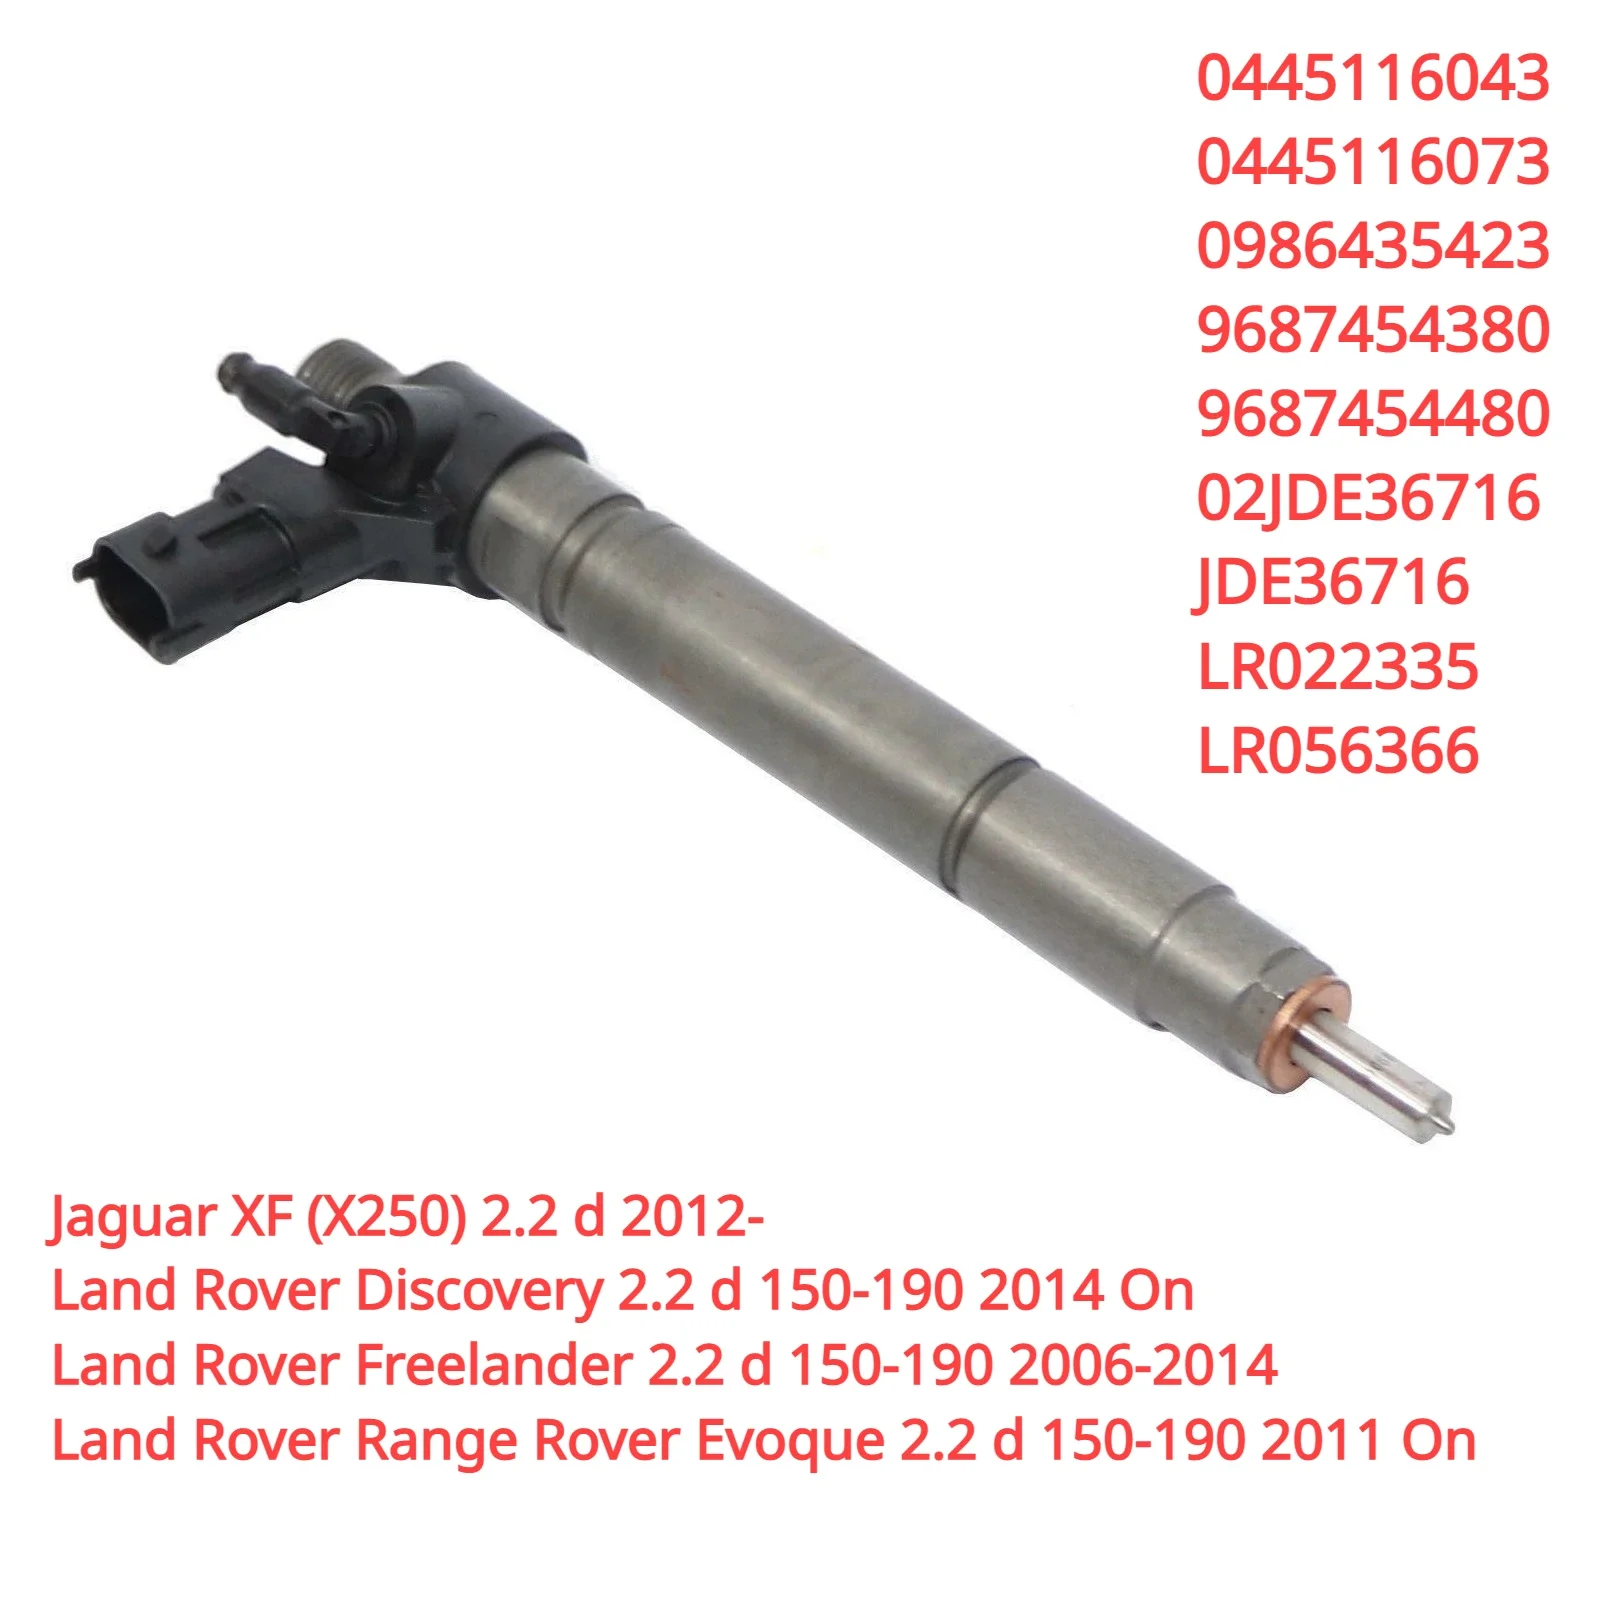 

0445116043 New Diesel Fuel Injector Nozzle For Land Rover Freelander Evoque 2.2 d Jaguar XF 22DT DW12 0445116073 9687454480